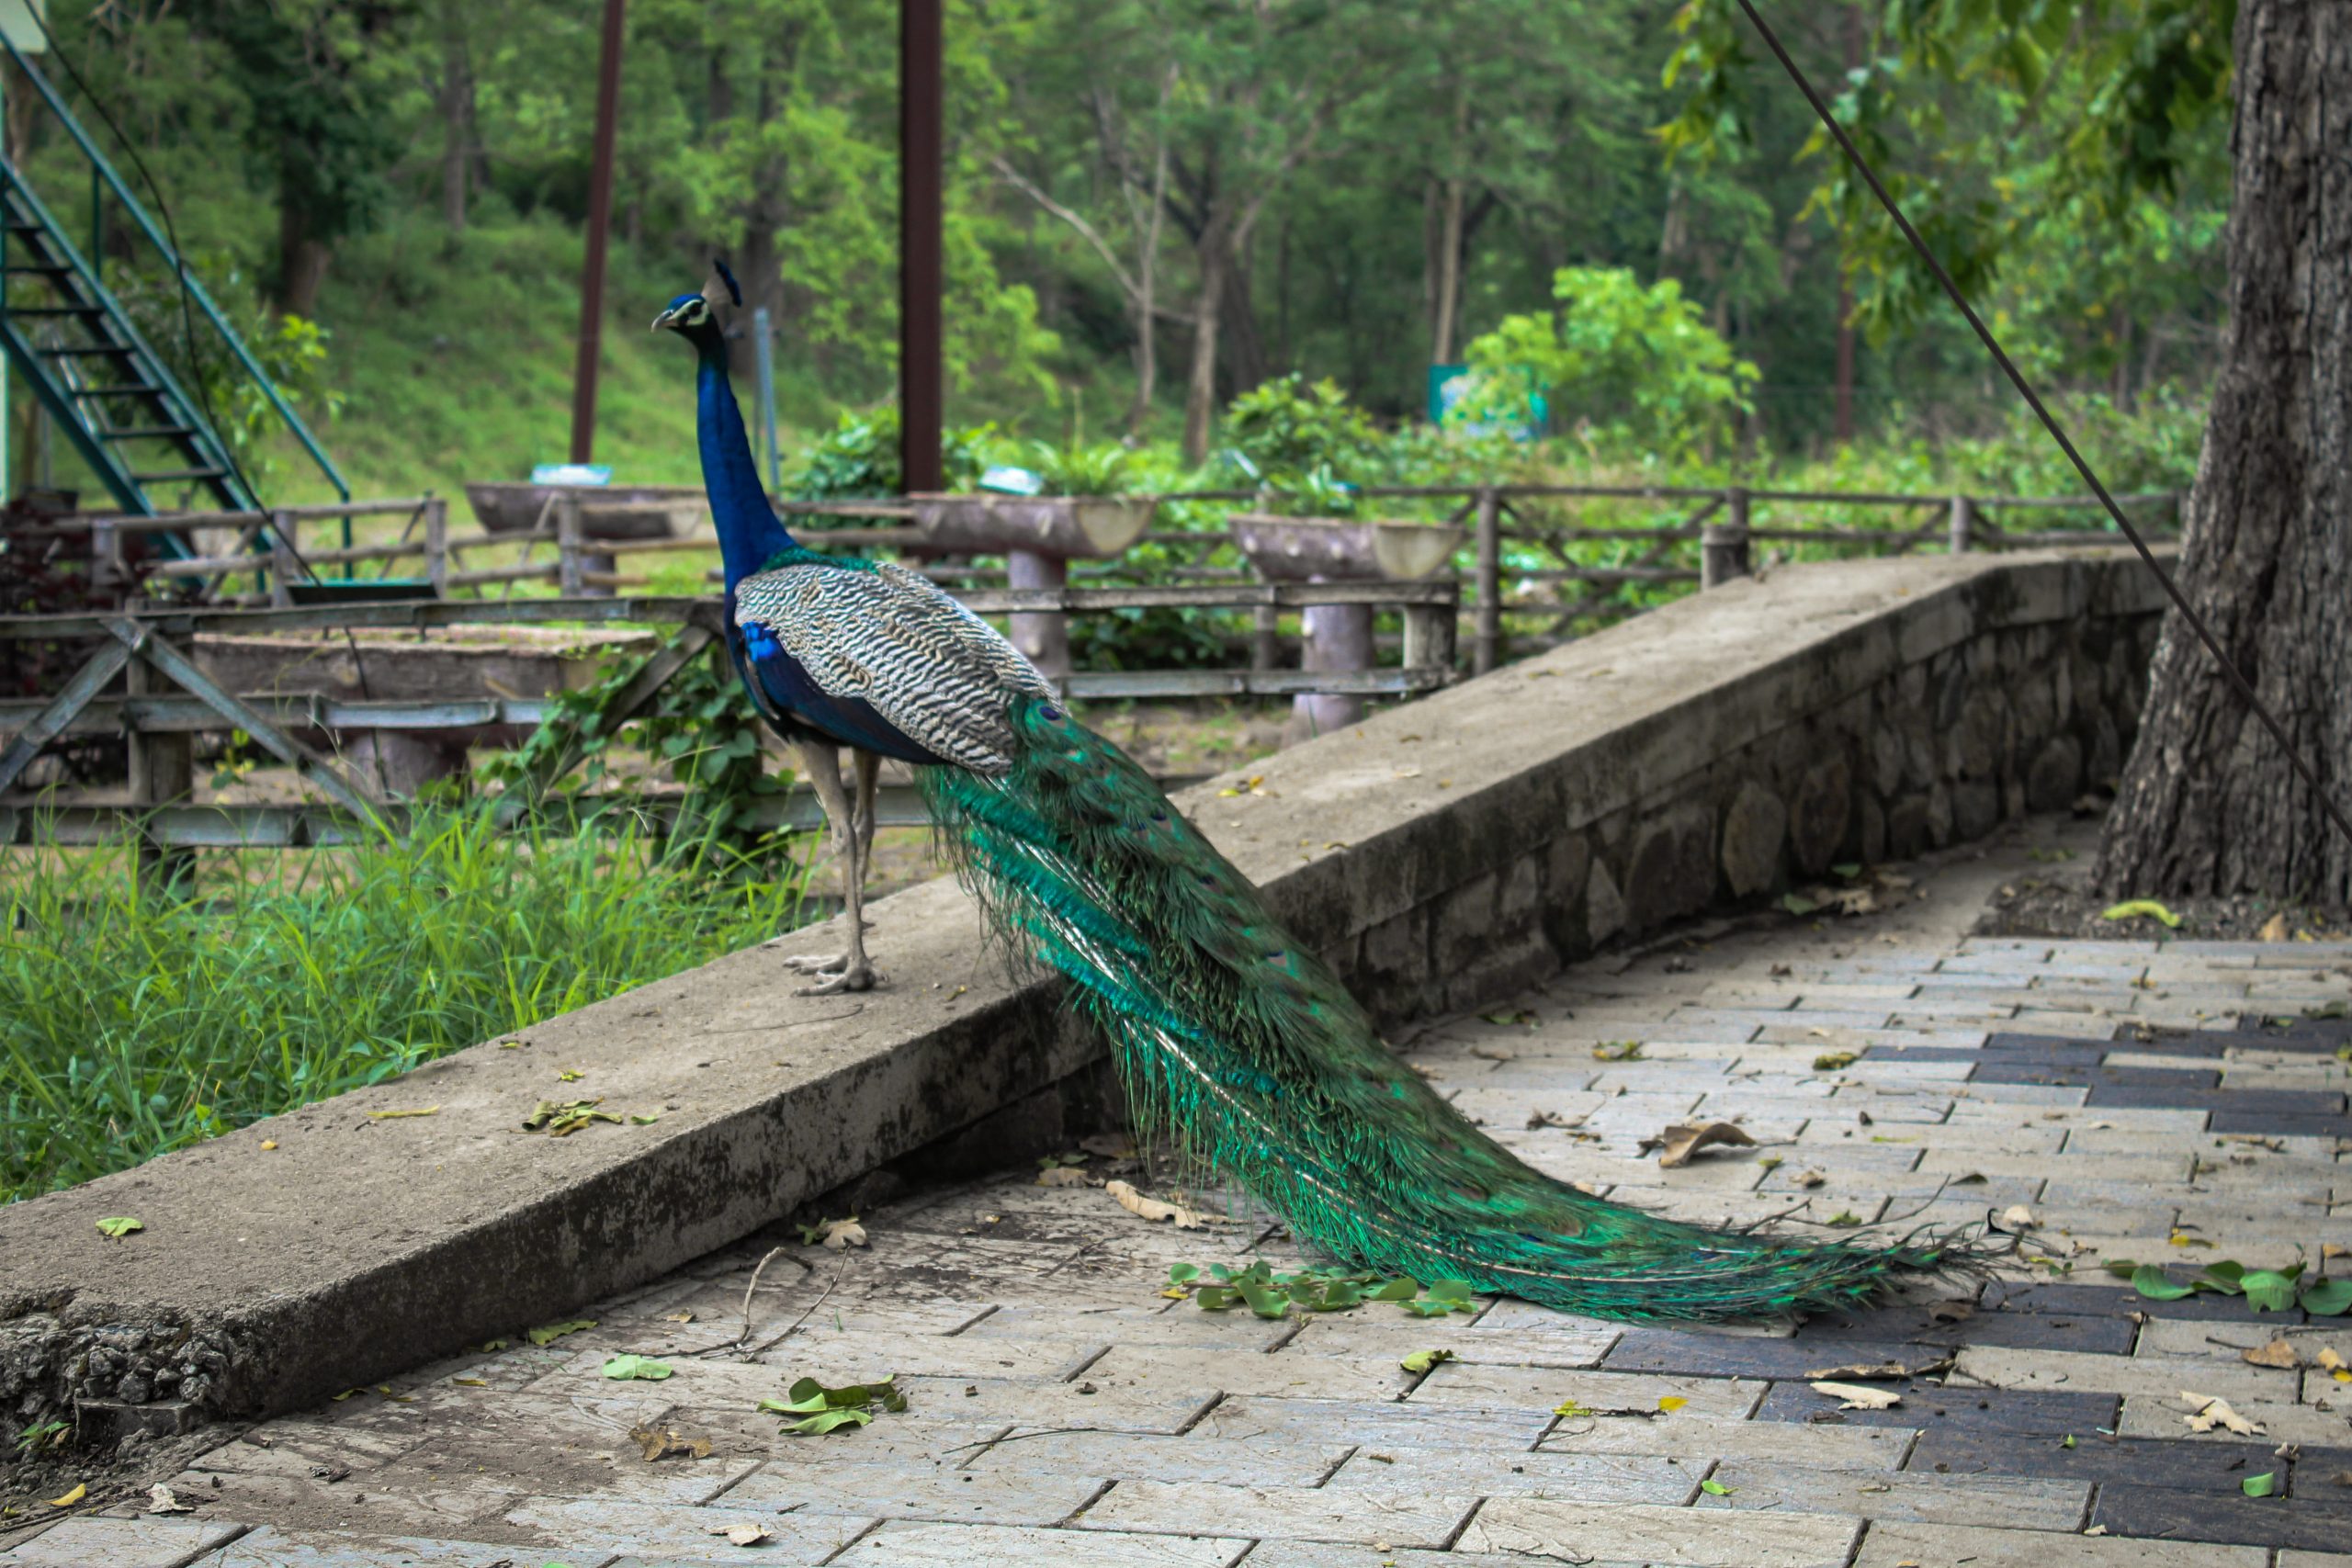 A peacock in the monsoon season